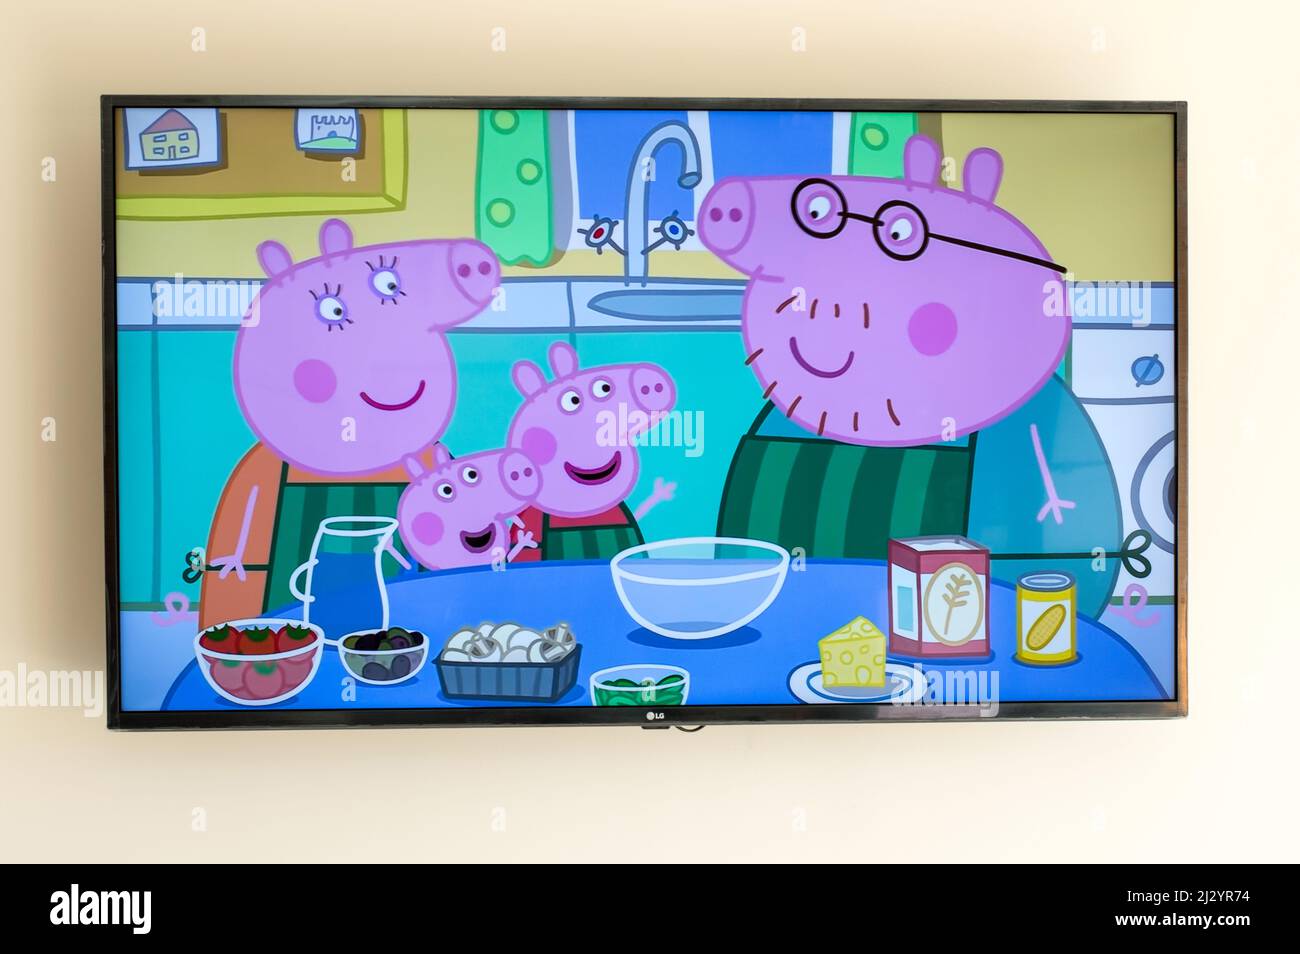 Familia Peppa Pig con Helado 4 Figuras en Tienda Inglesa